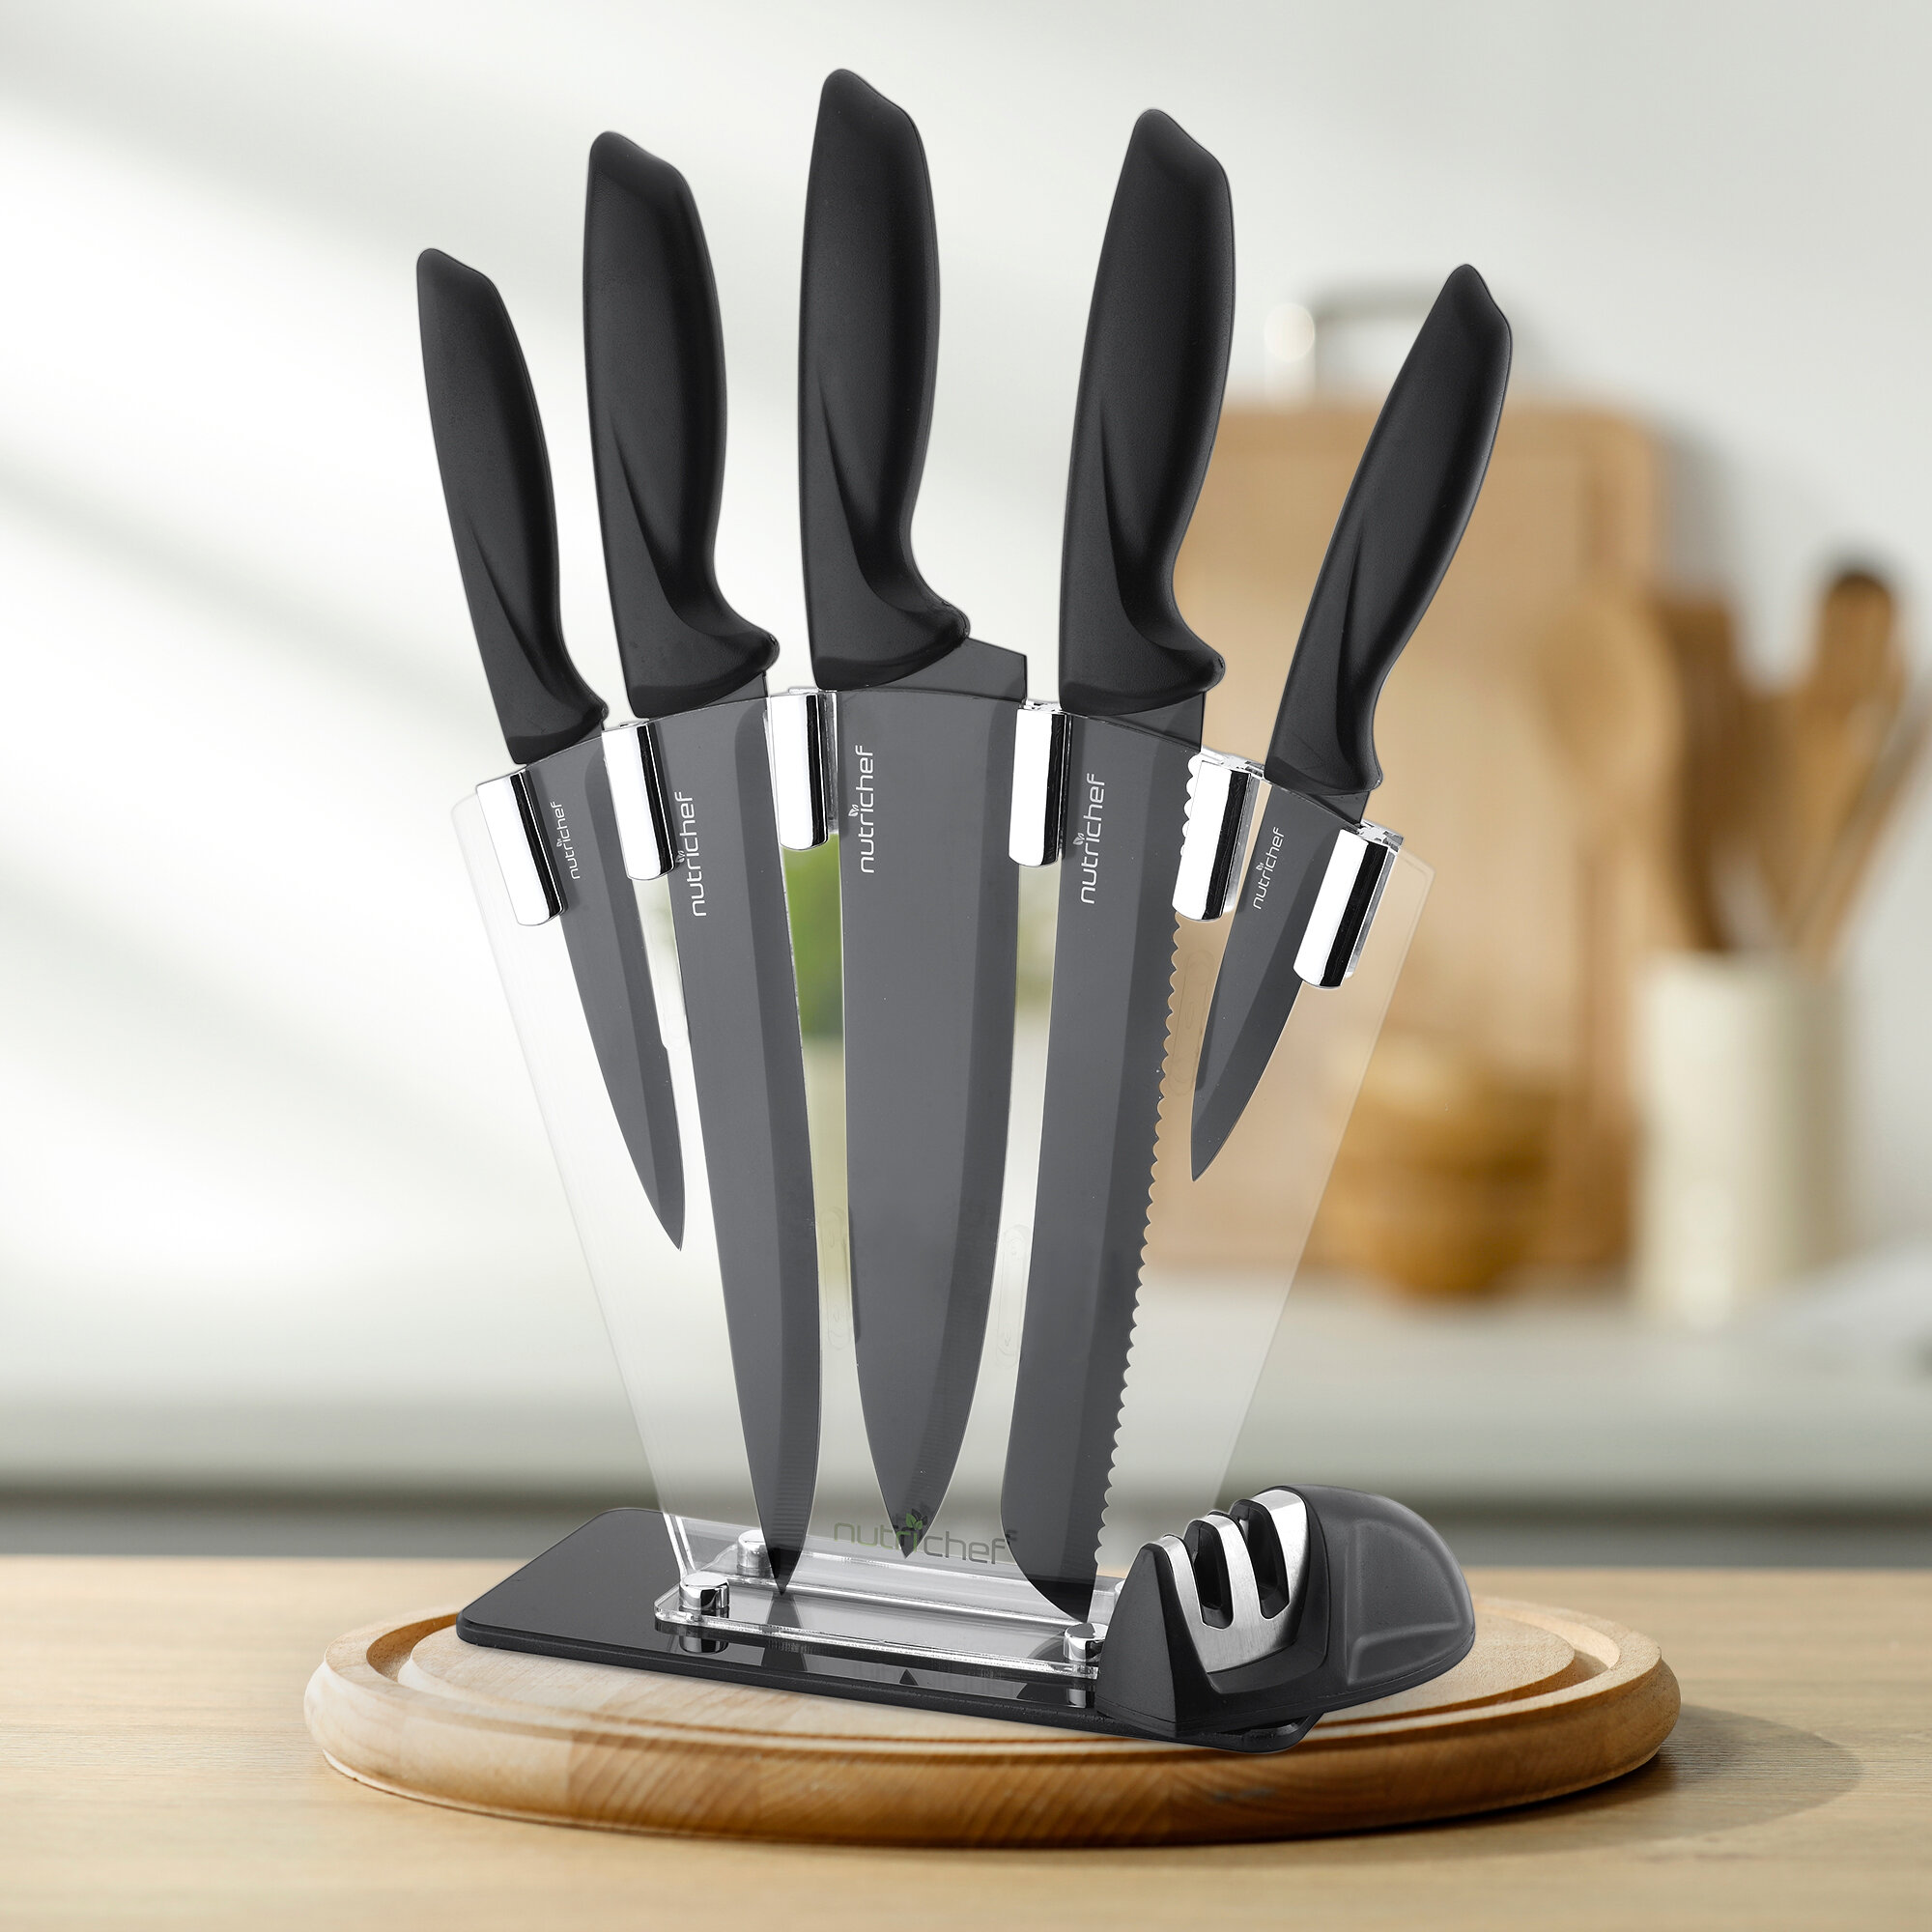  Home Hero 4 Pcs Kitchen Knife Set, Chef Knife Set & Steak Knives  - Professional Design Collection - Razor-Sharp High Carbon Stainless Steel  Knives with Ergonomic Handles (4 Pcs - Black)